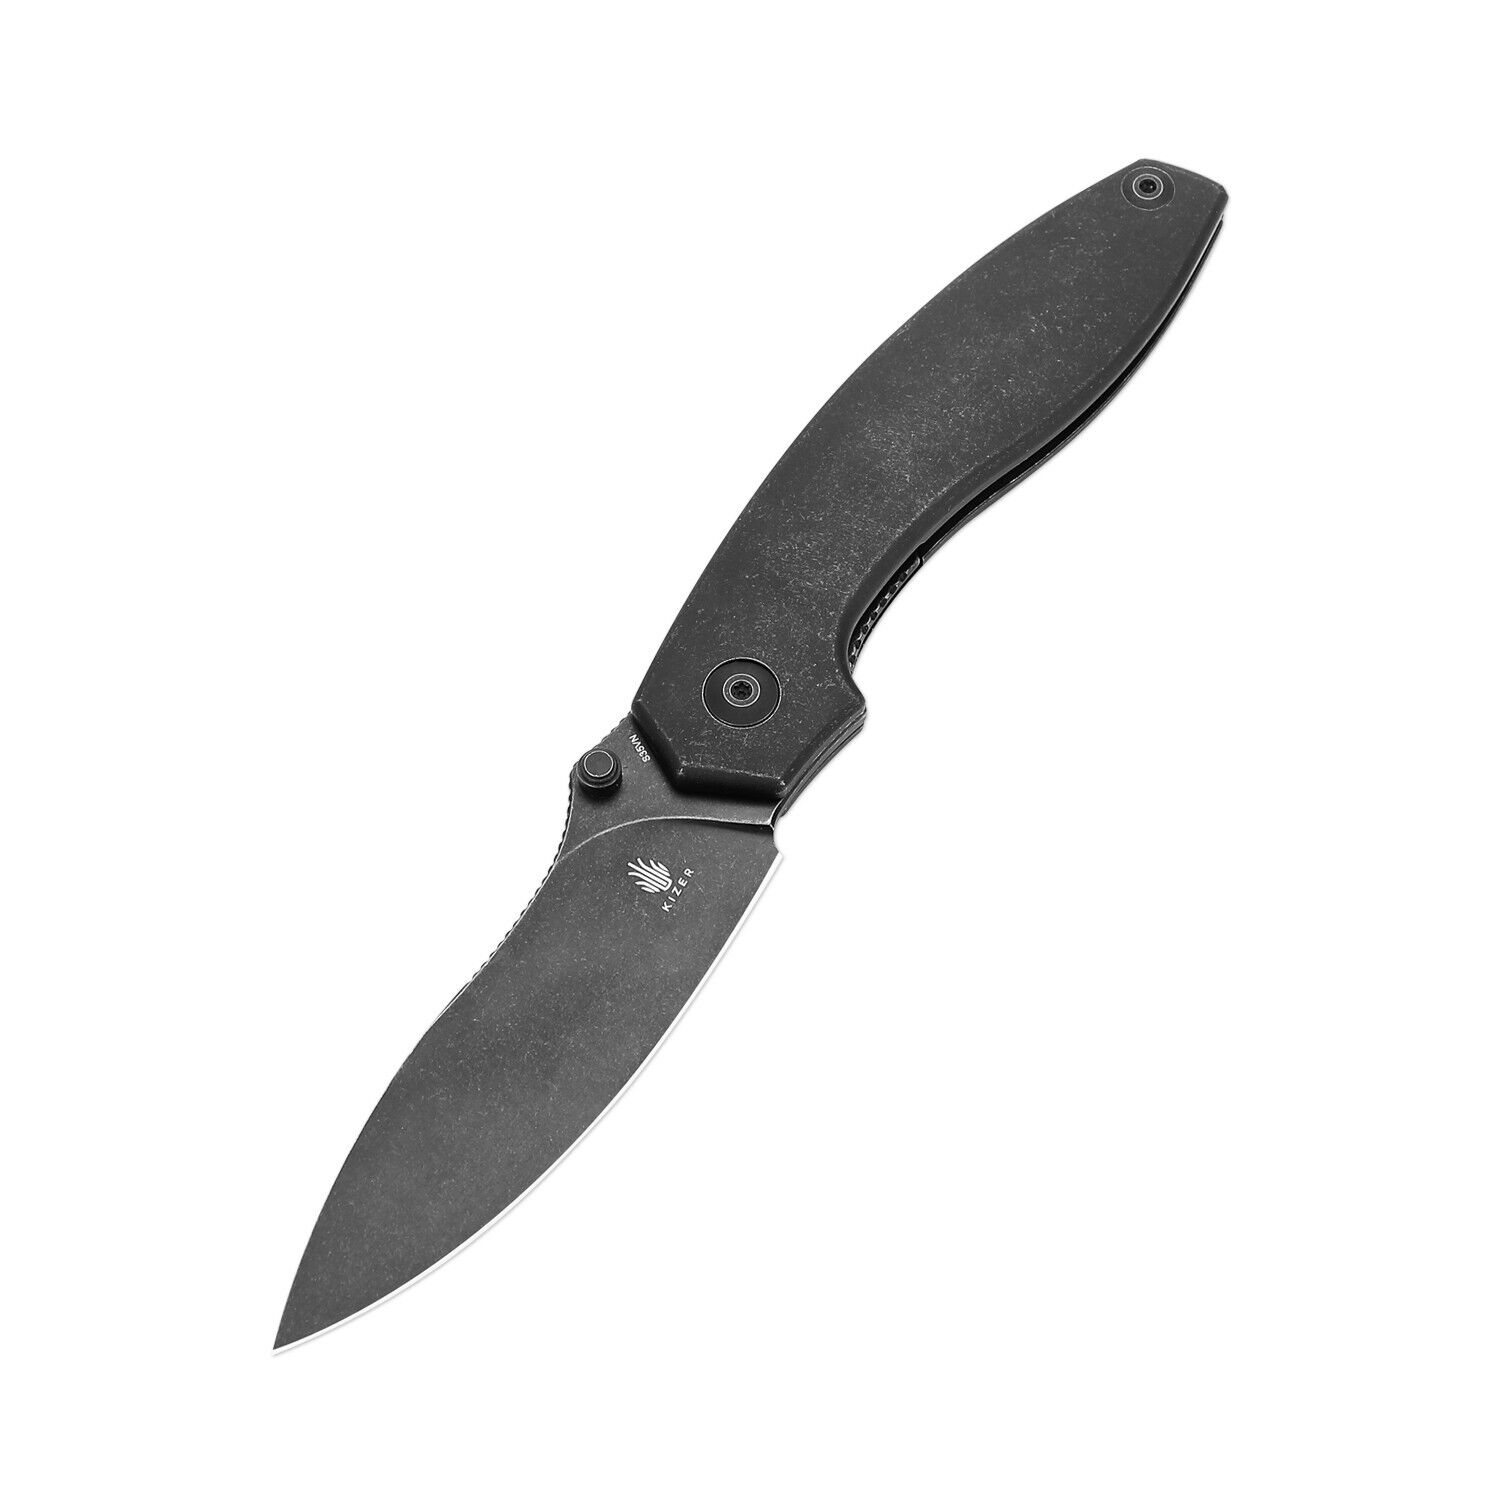 Kizer Doberman Folding Pocket Knife S35VN Steel Black Titanium Handle Ki4639A1